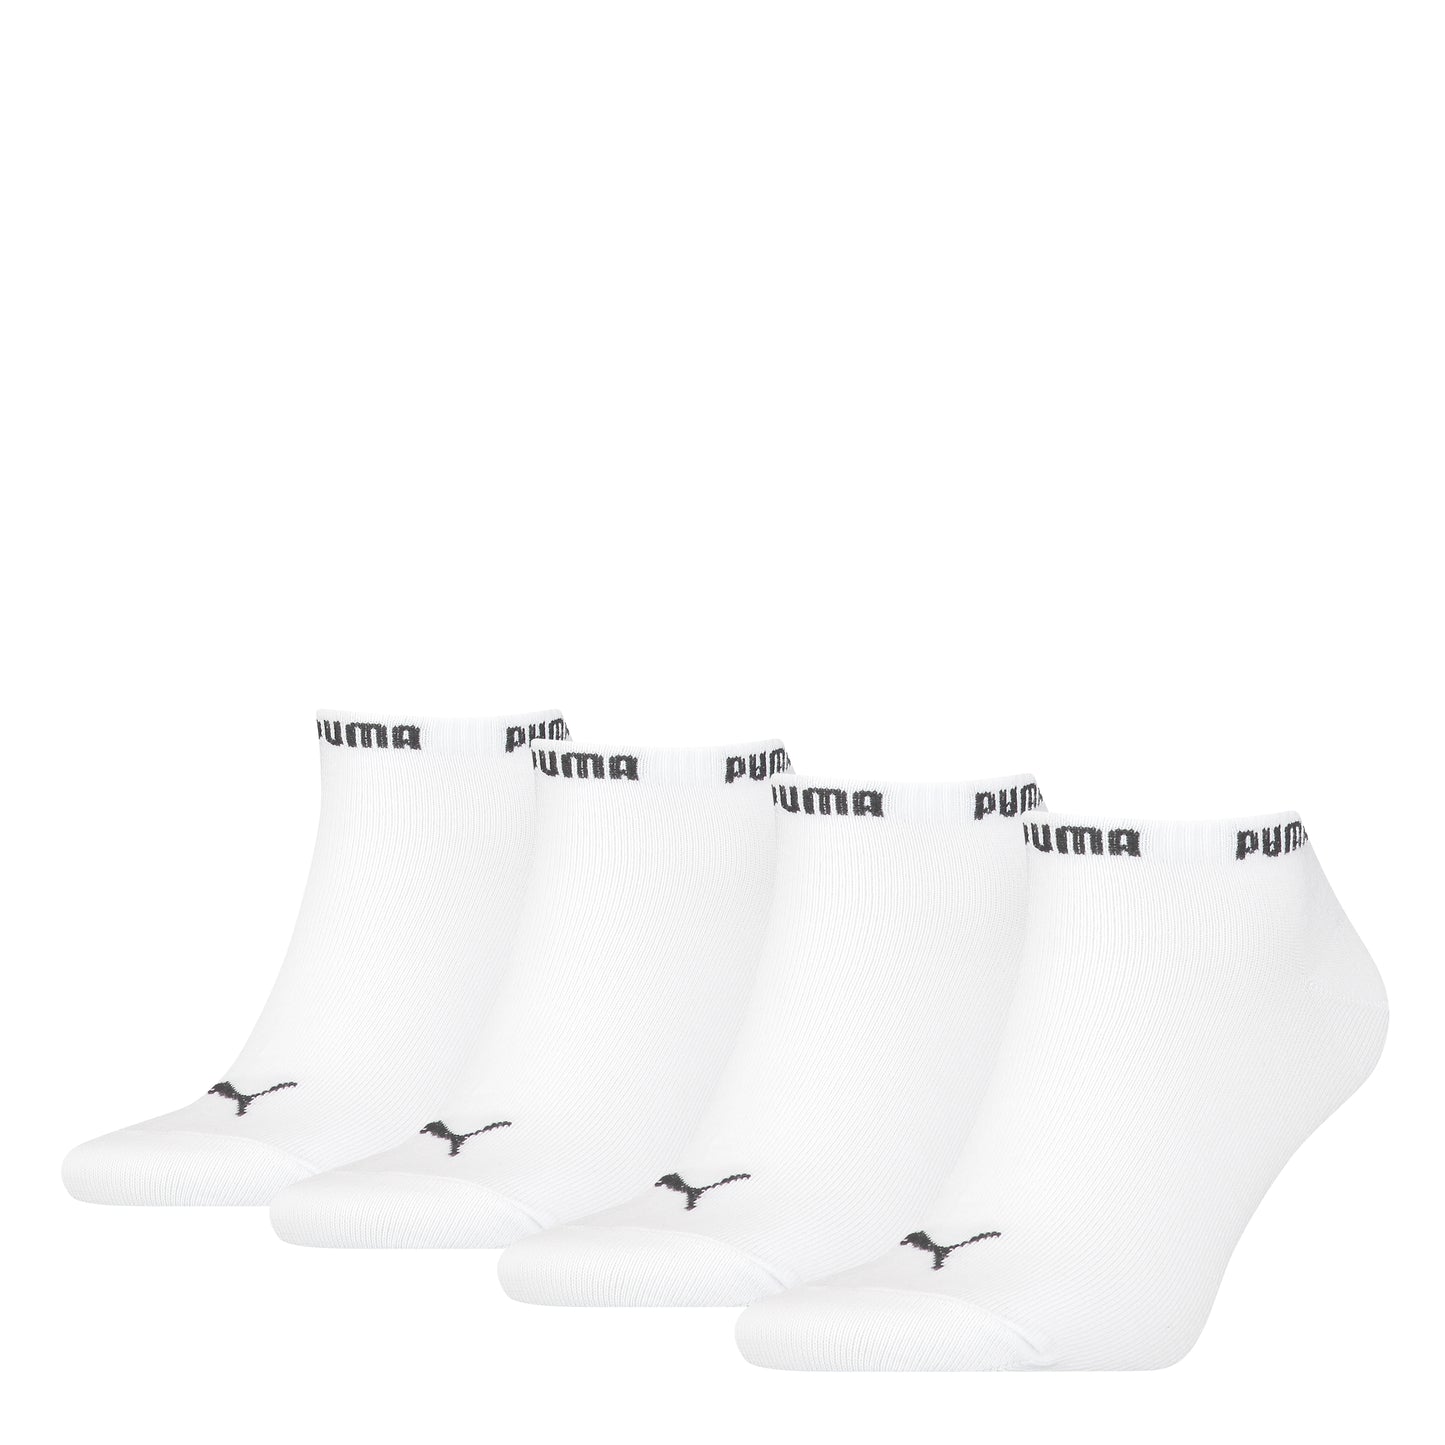 Puma cotton sneaker socks- 4 pack